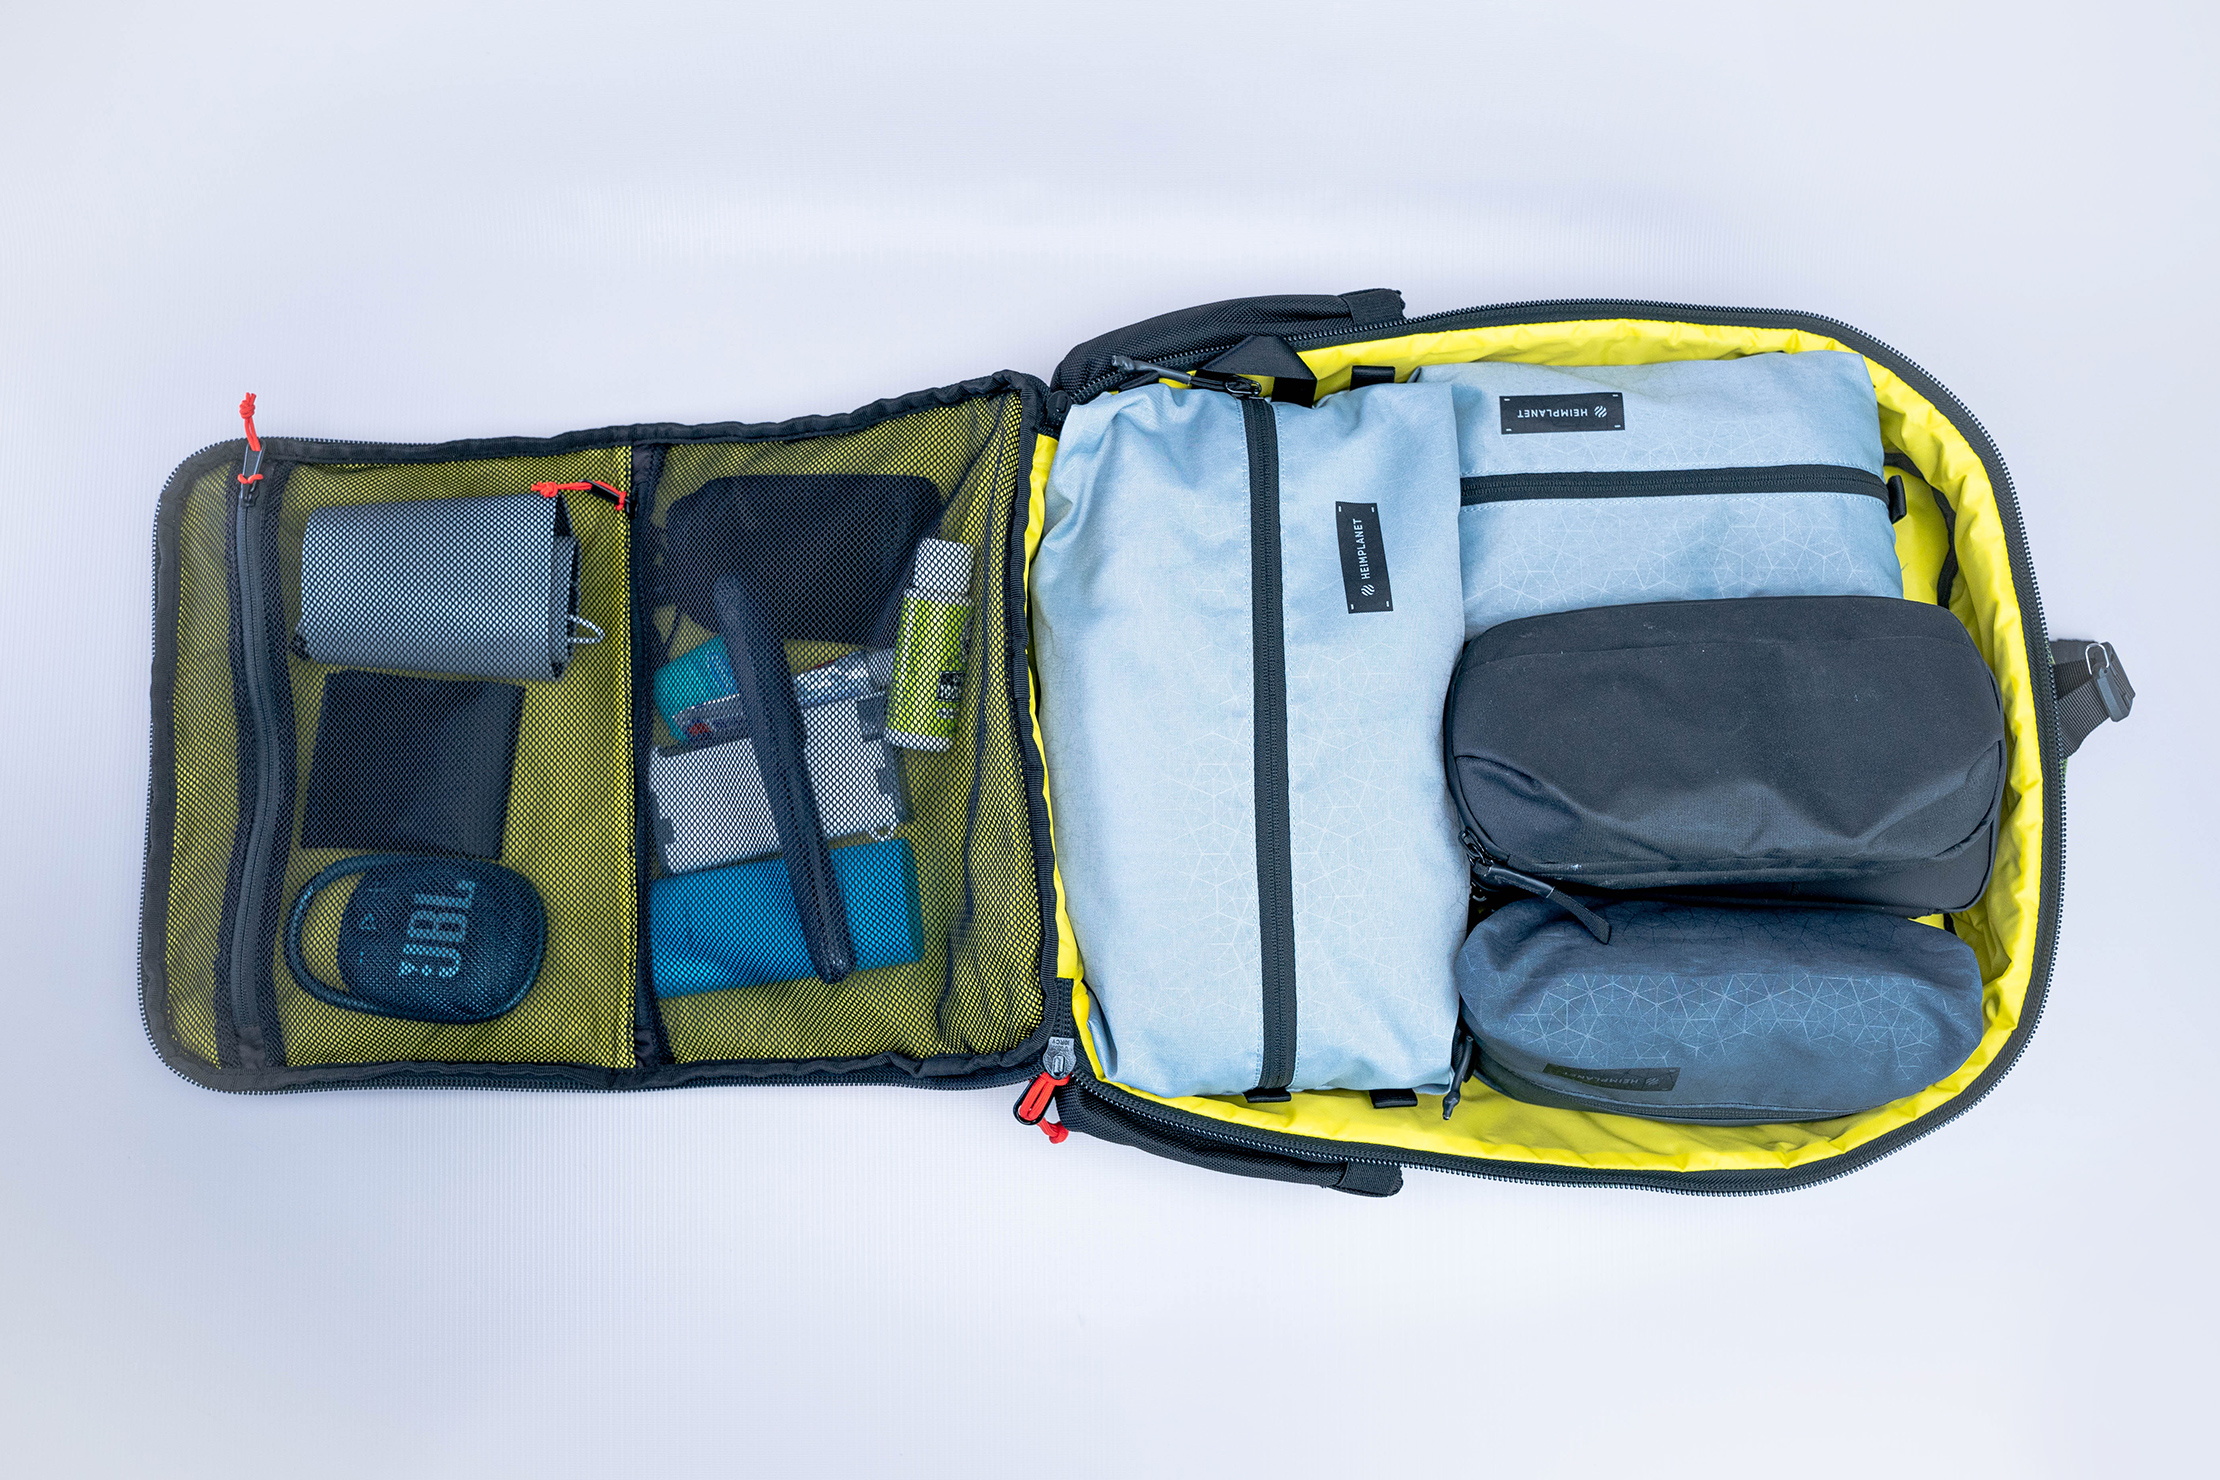 Topo Designs Global Travel Bag 30L Stuffed